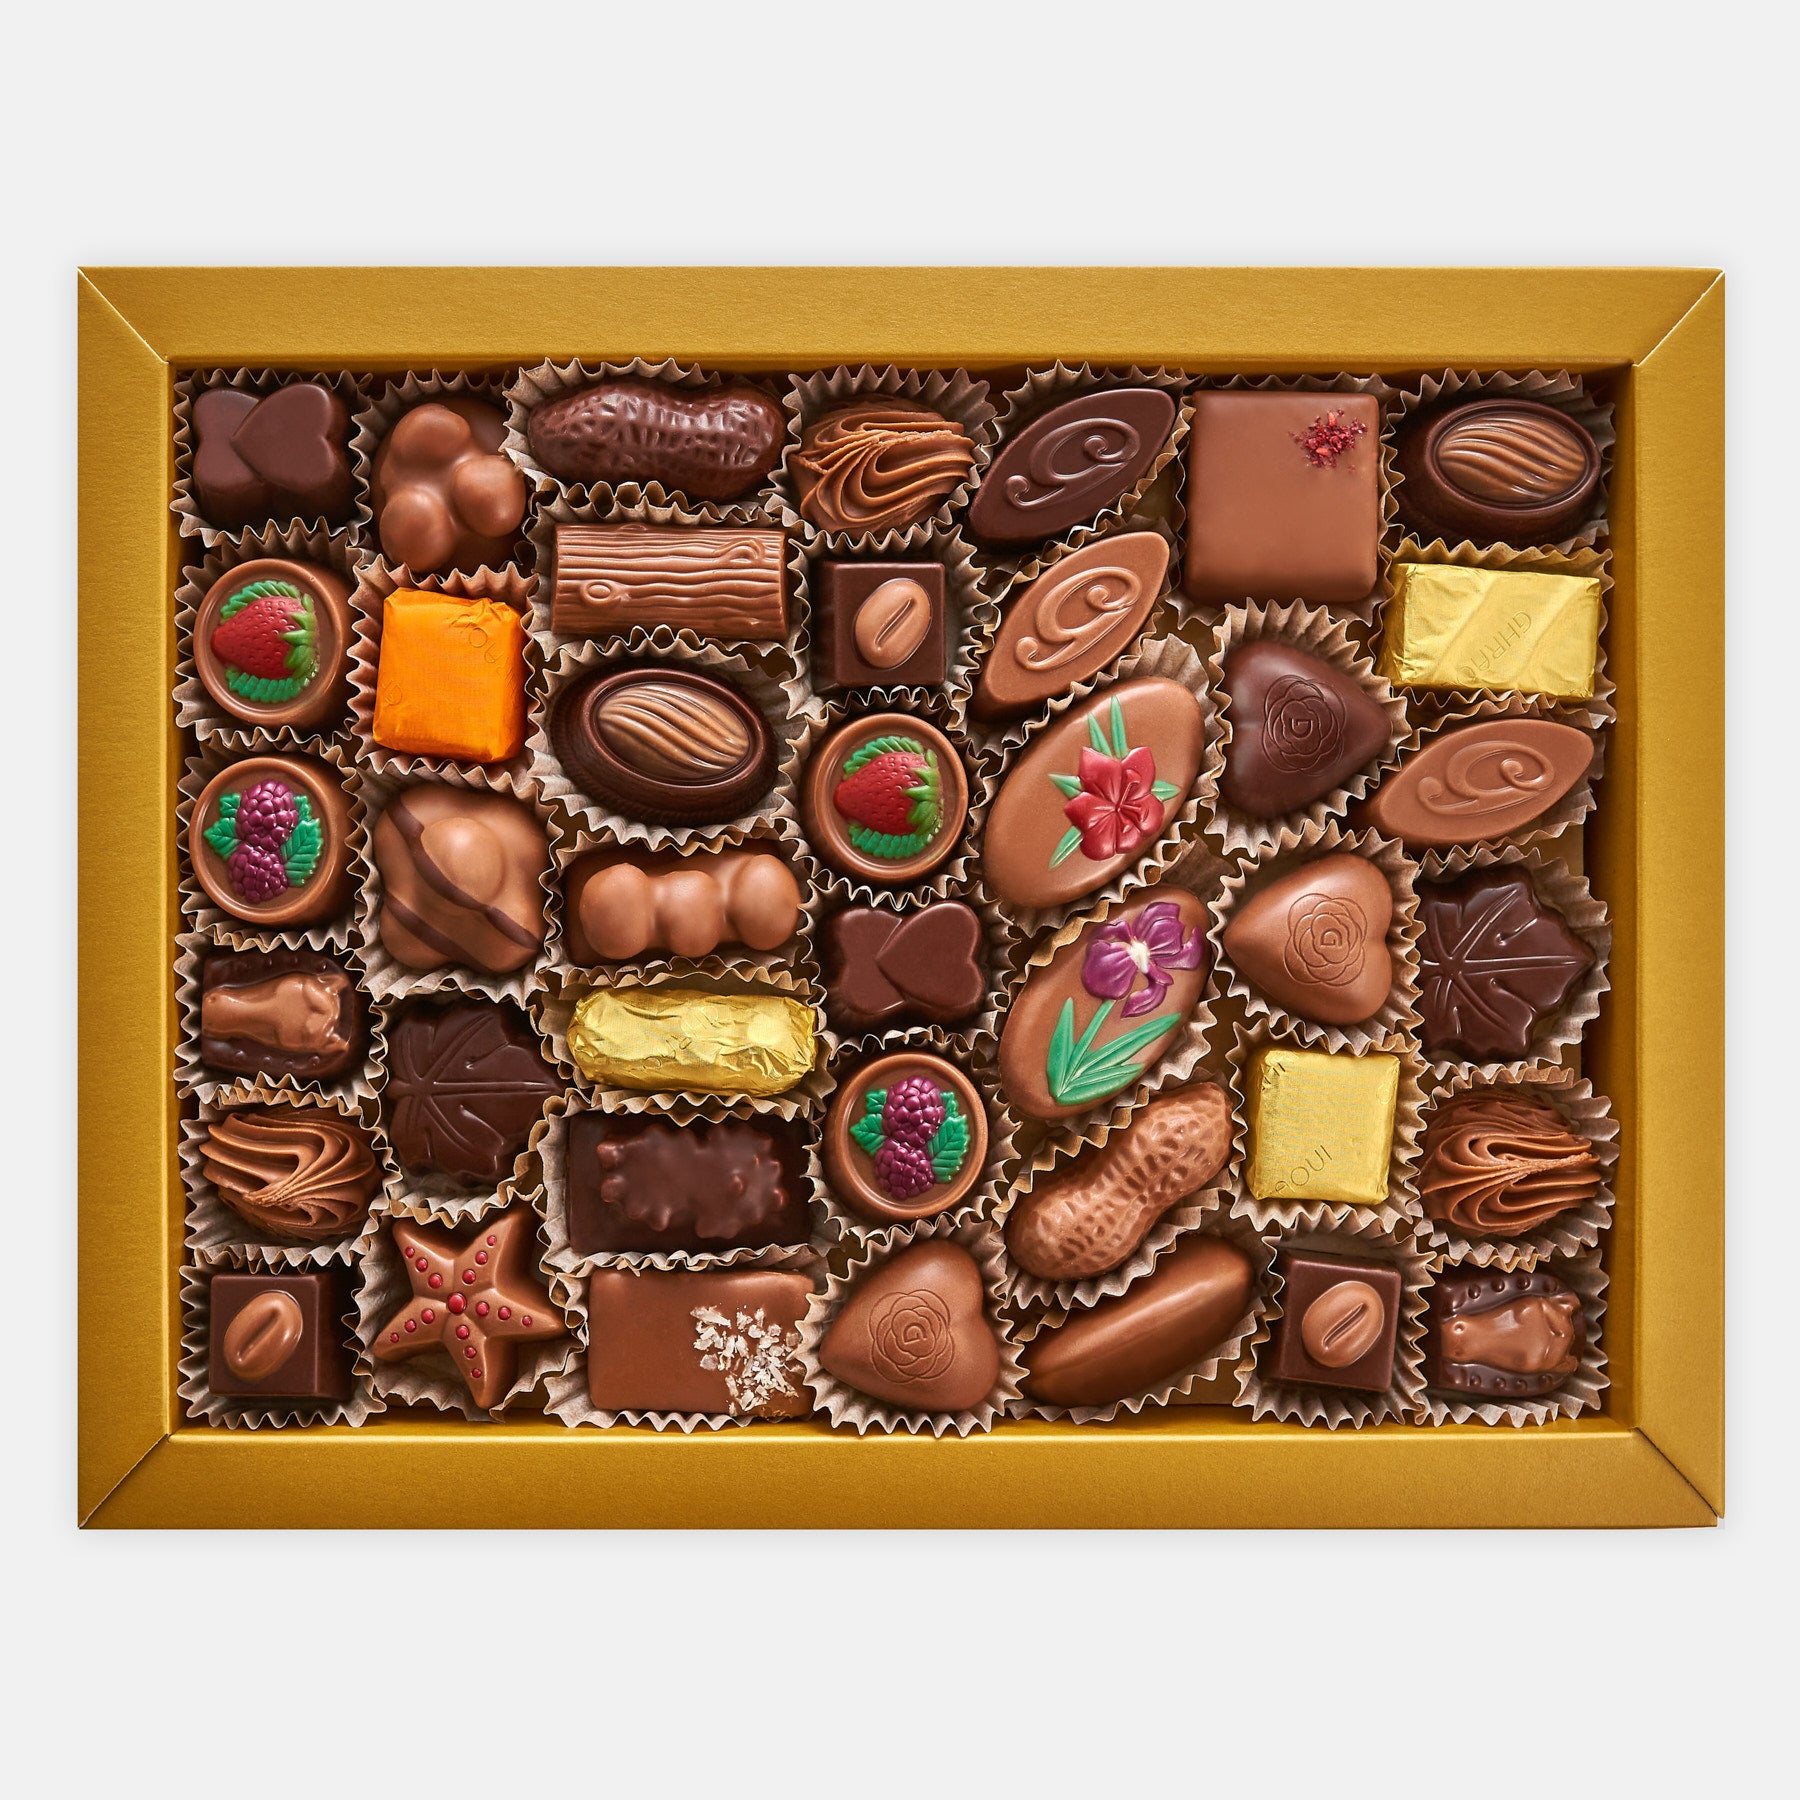 84 Piece Luxury Chocolate Box - ghraoui-chocolate